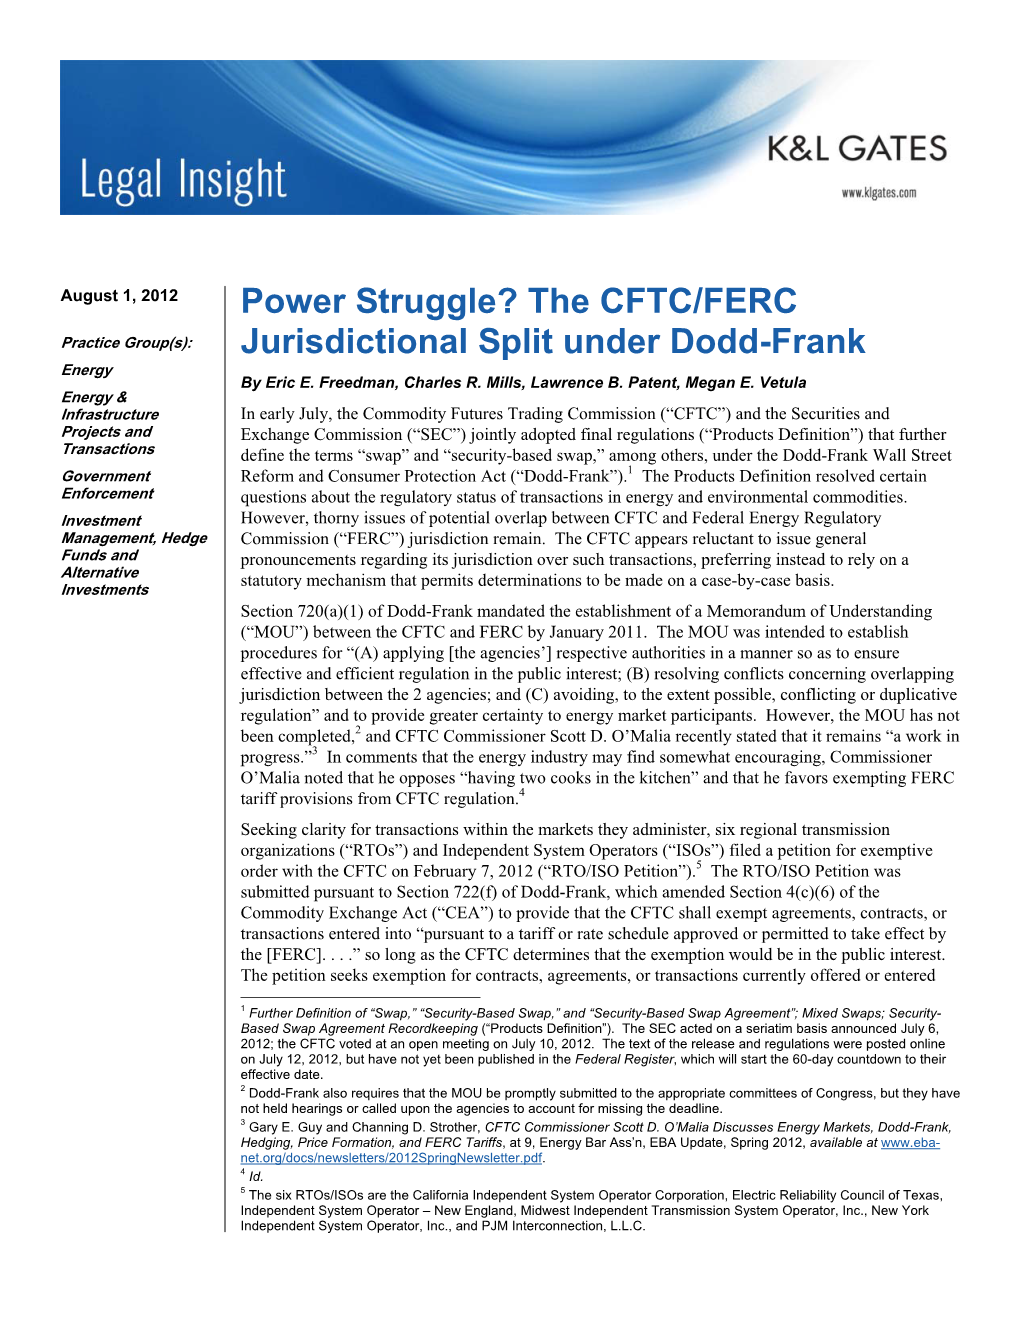 Power Struggle? the CFTC/FERC Jurisdictional Split Under Dodd-Frank